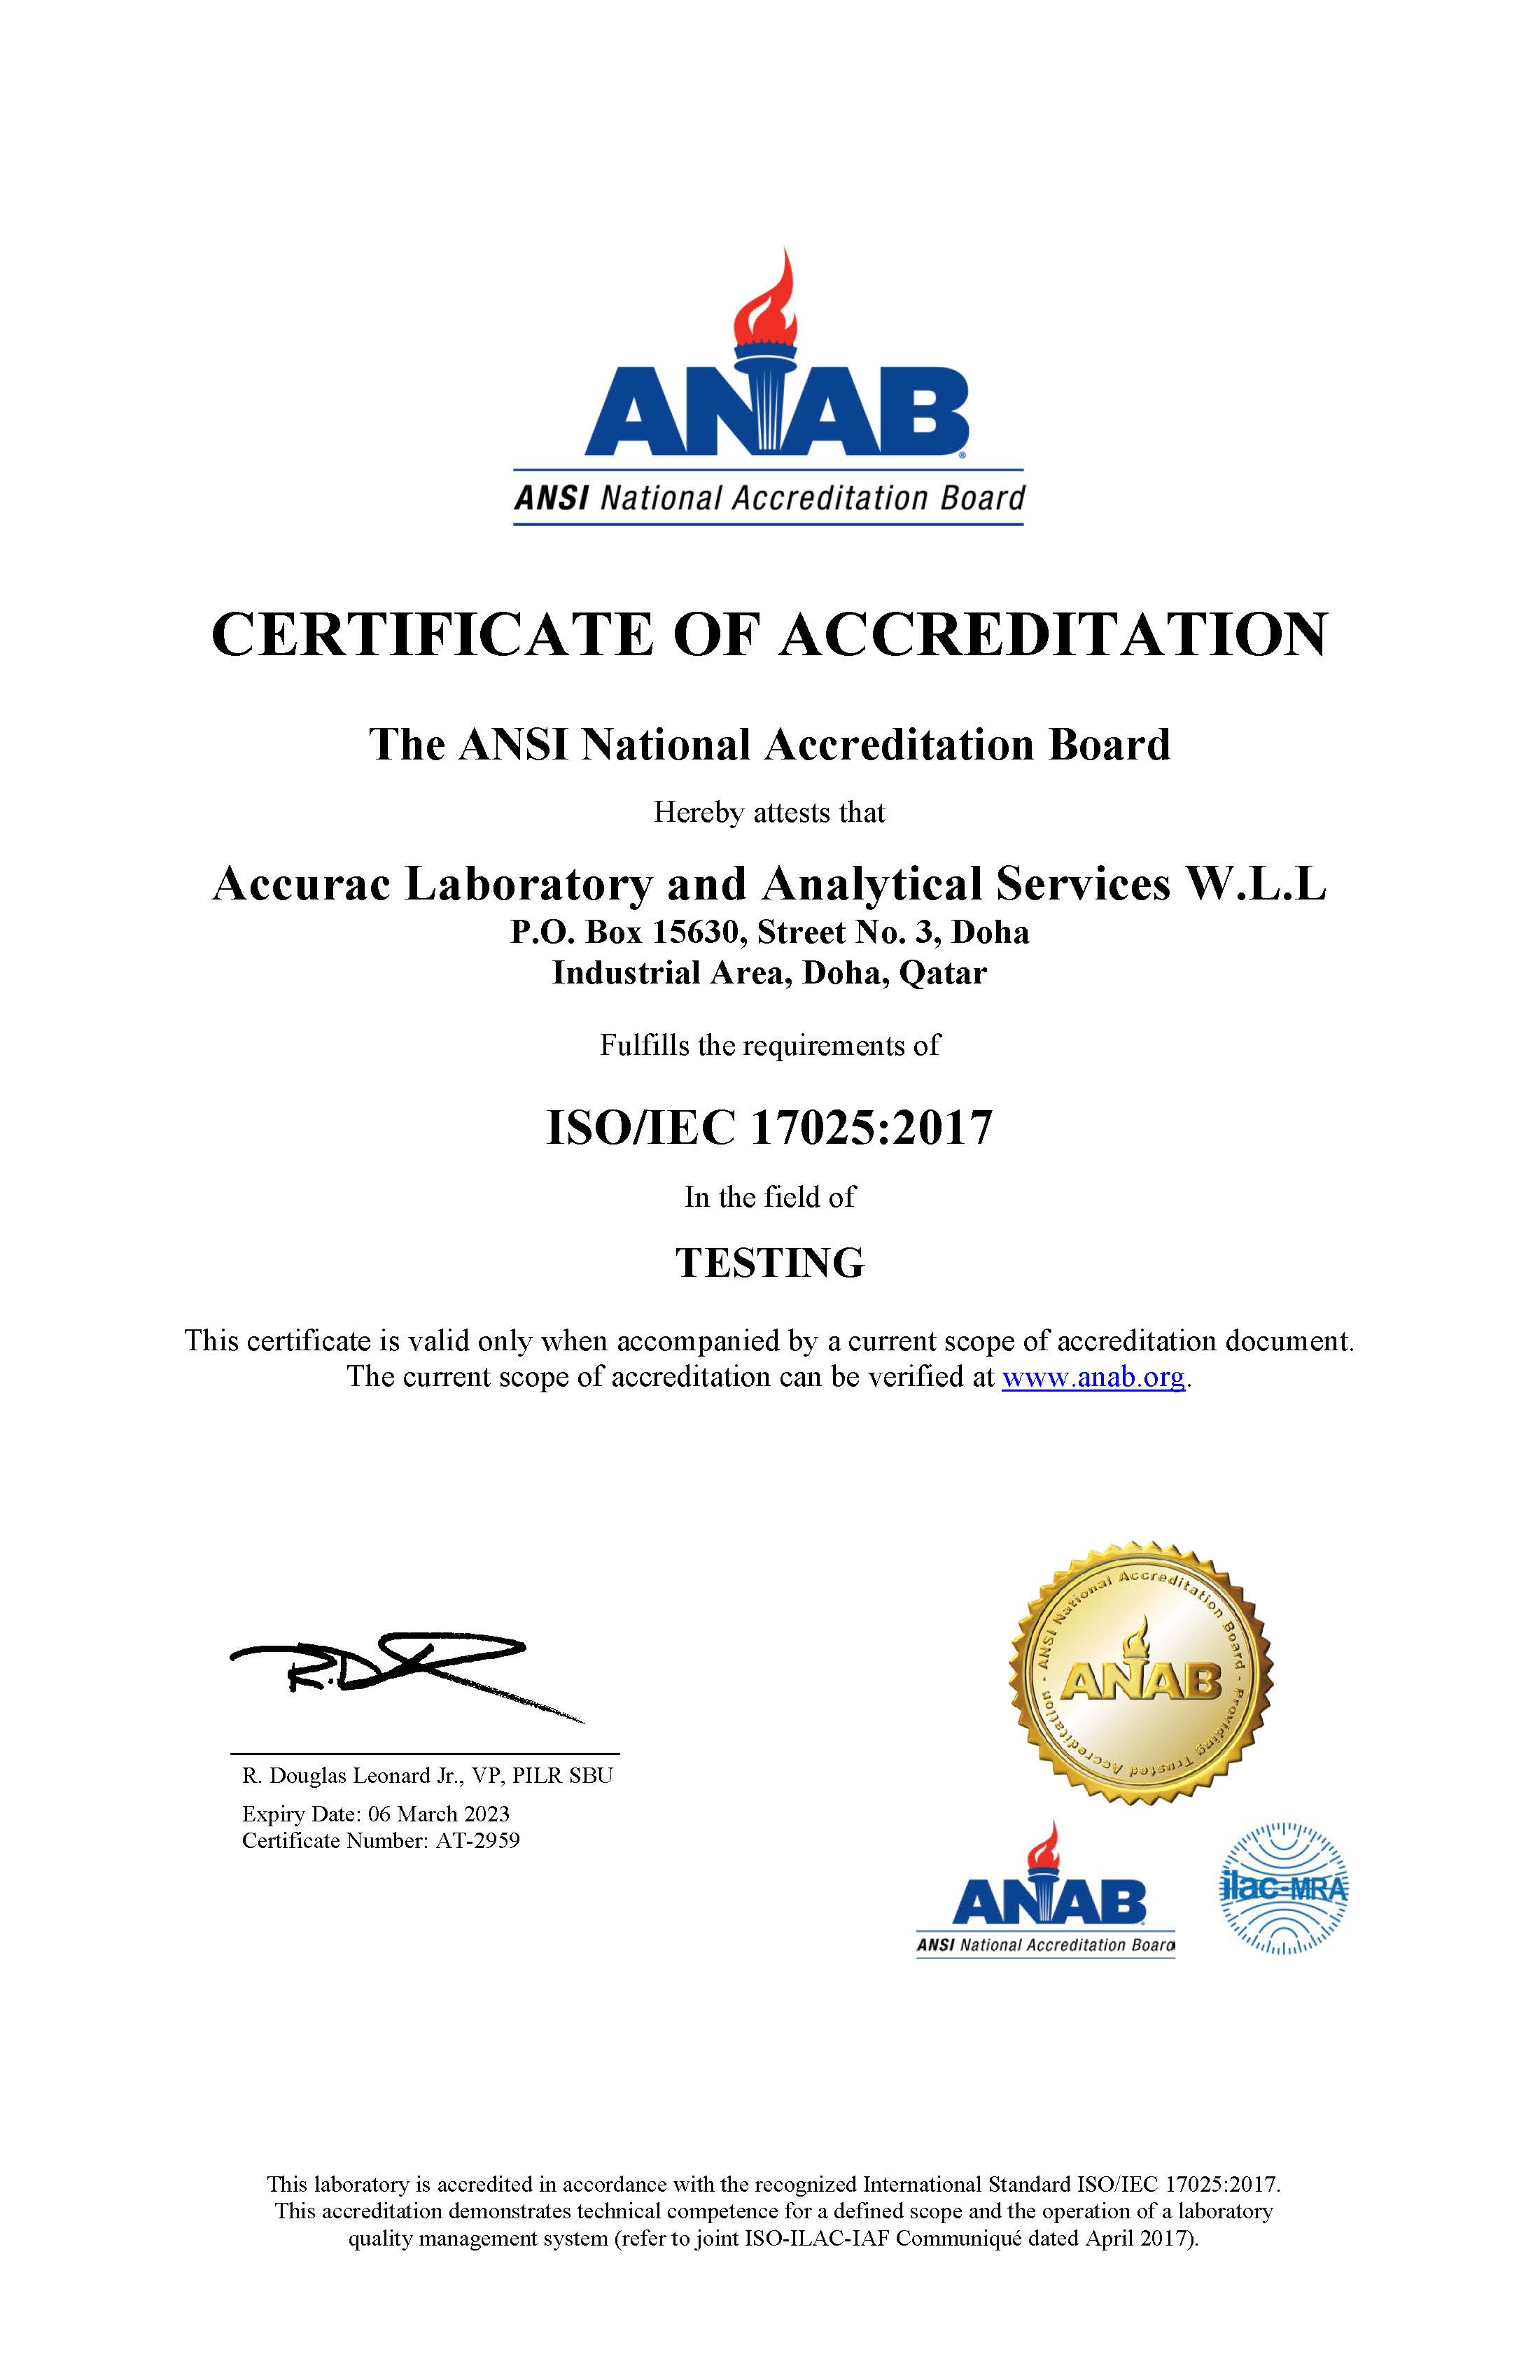 ISO 17025:2017 ANAB ANSI NAtional Accreditation Board - Accurac Laboratory